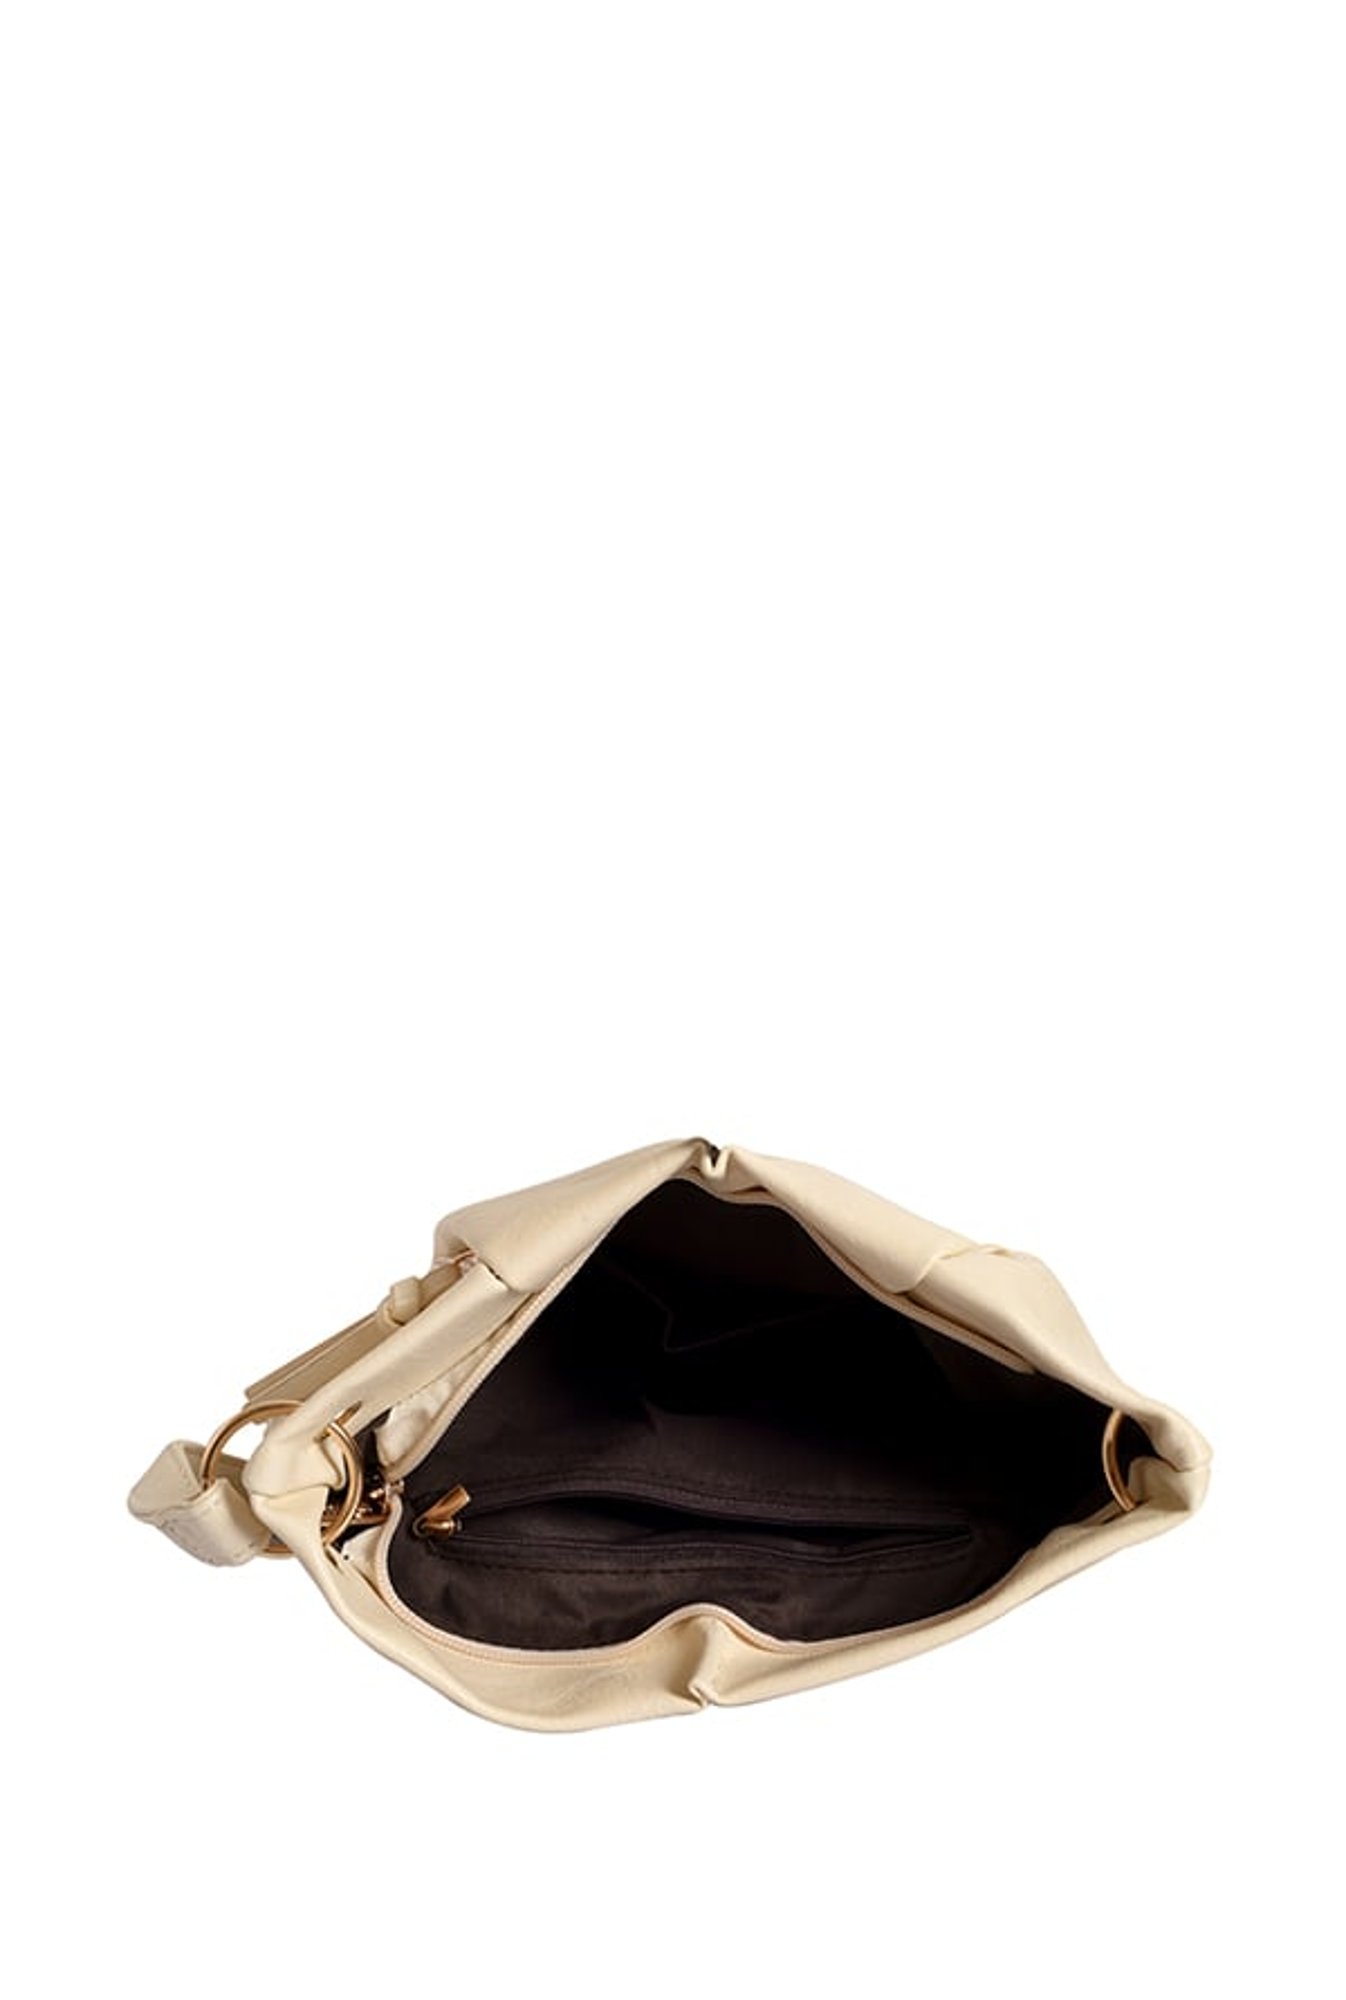 Buy Lino Perros Cream Tassel Sling Bag For Women At Best Price @ Tata CLiQ